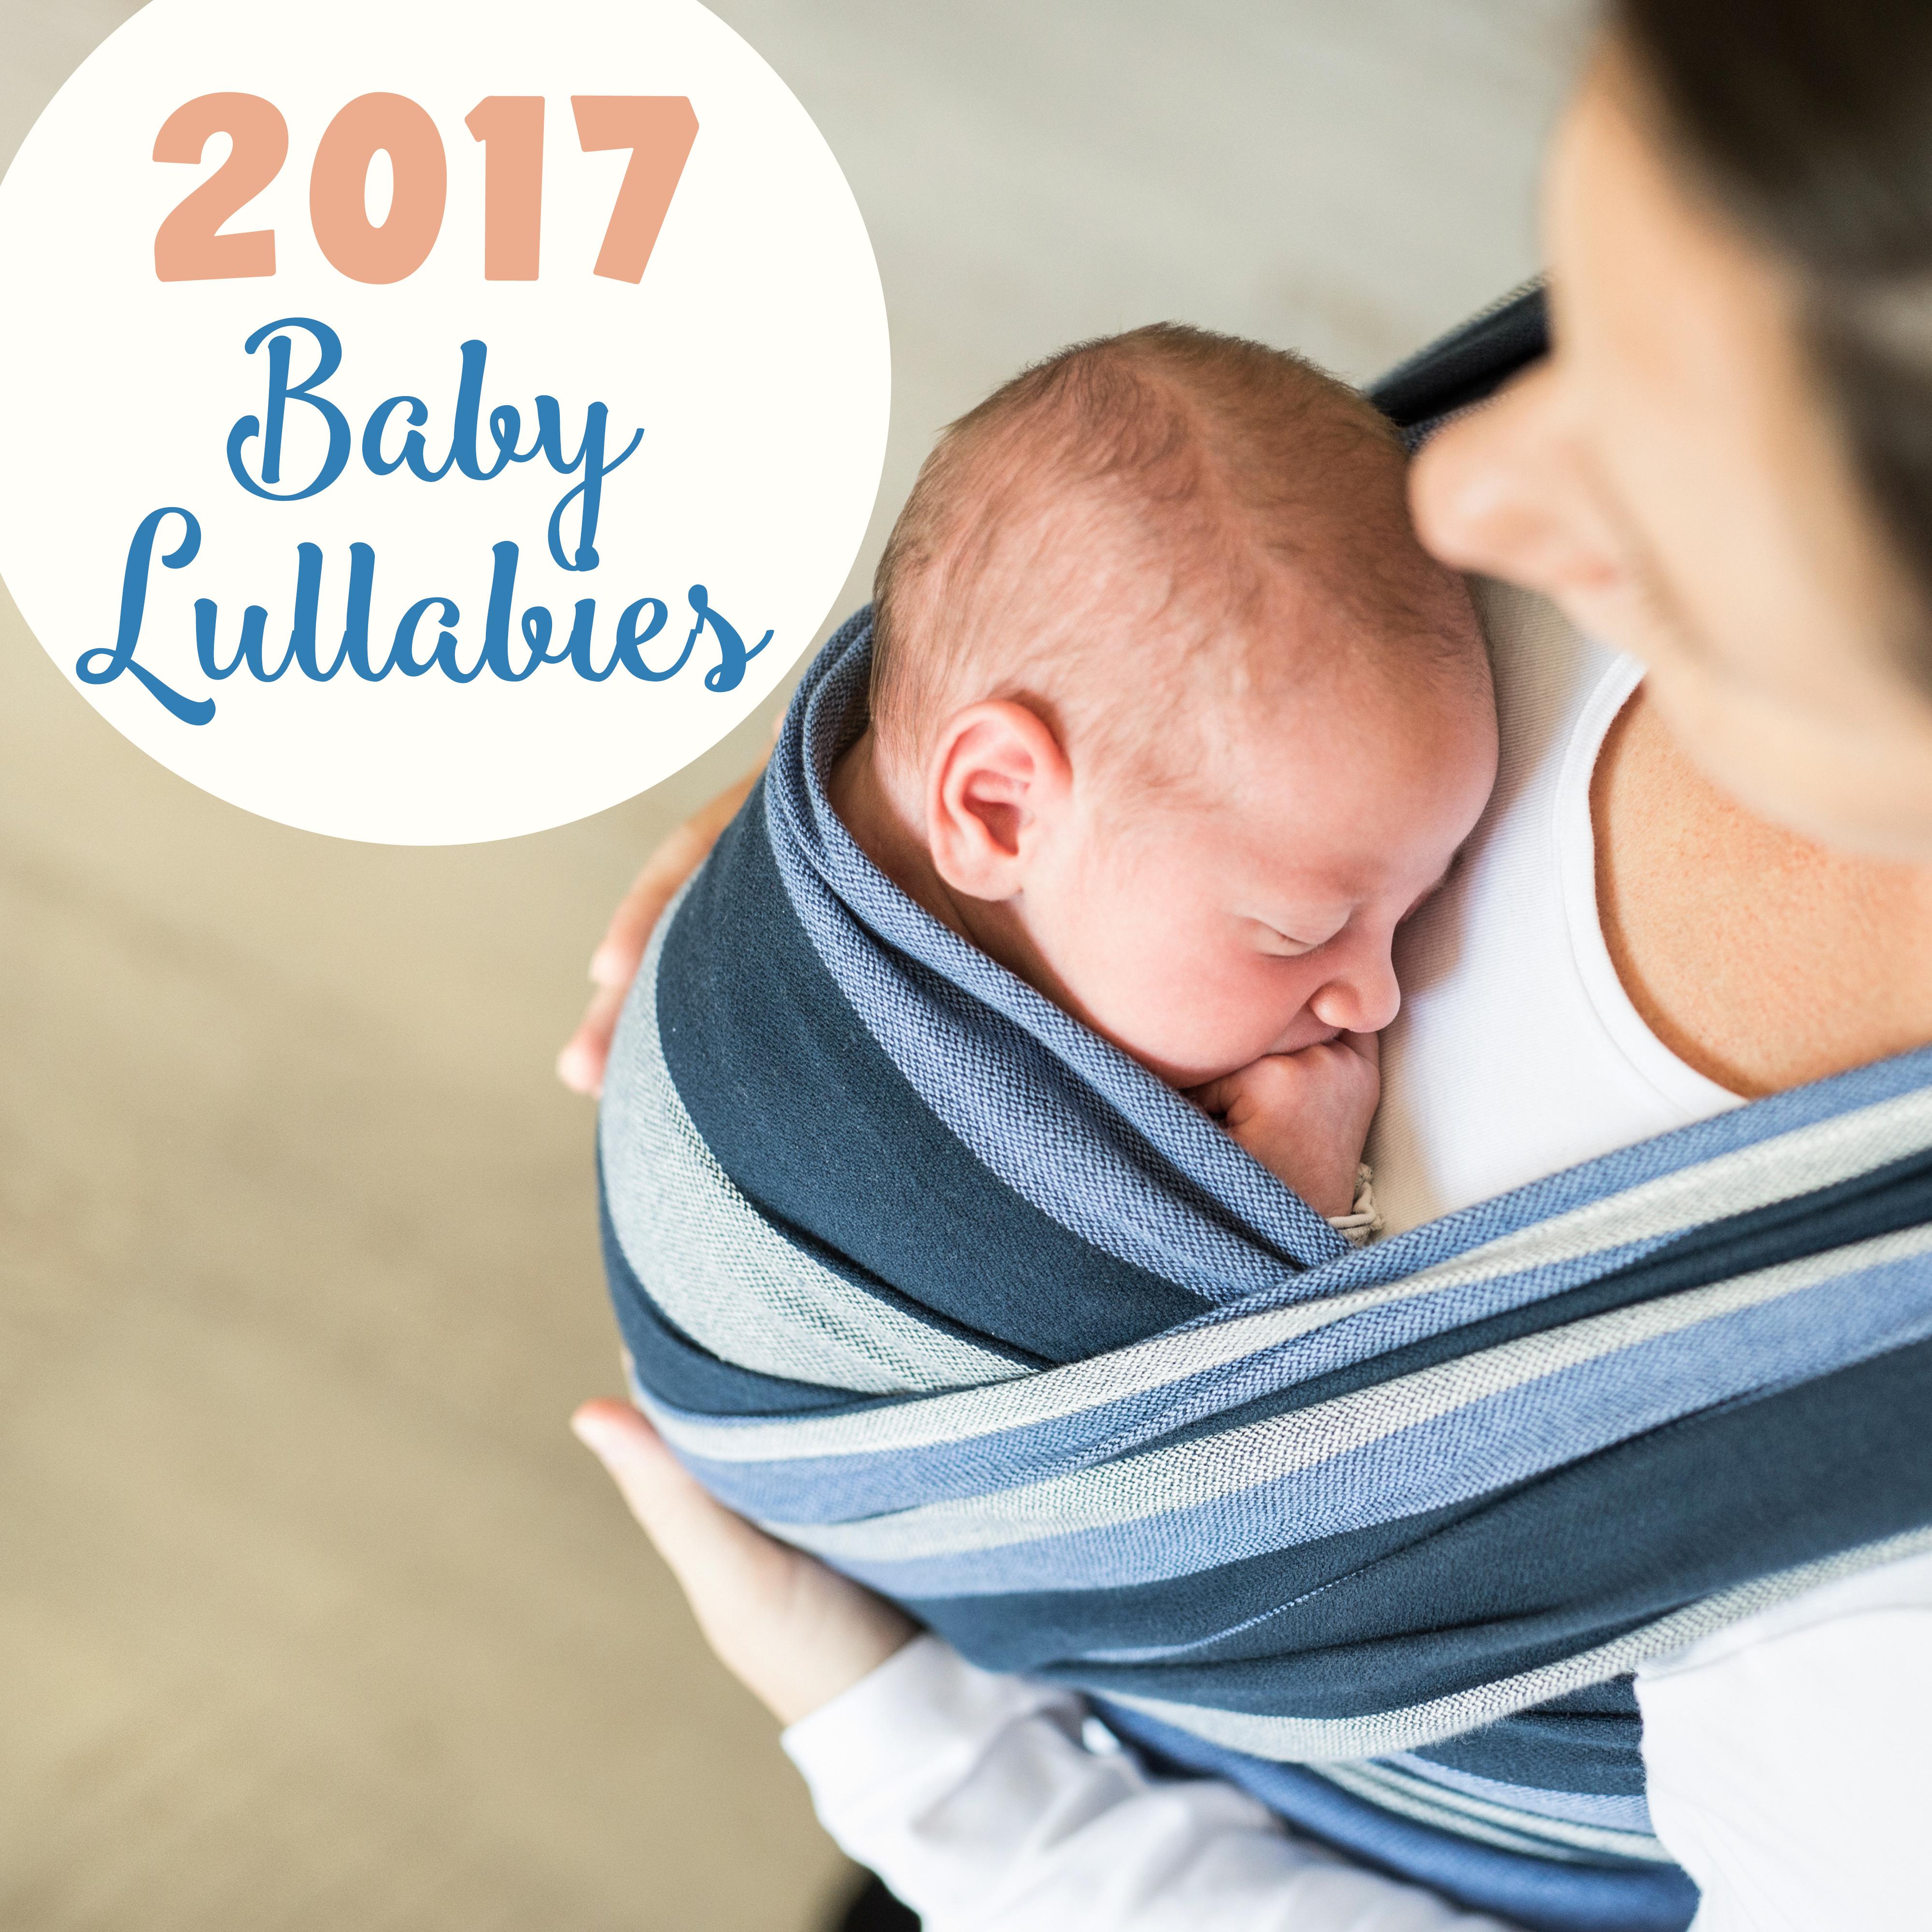 2017 Baby Lullabies